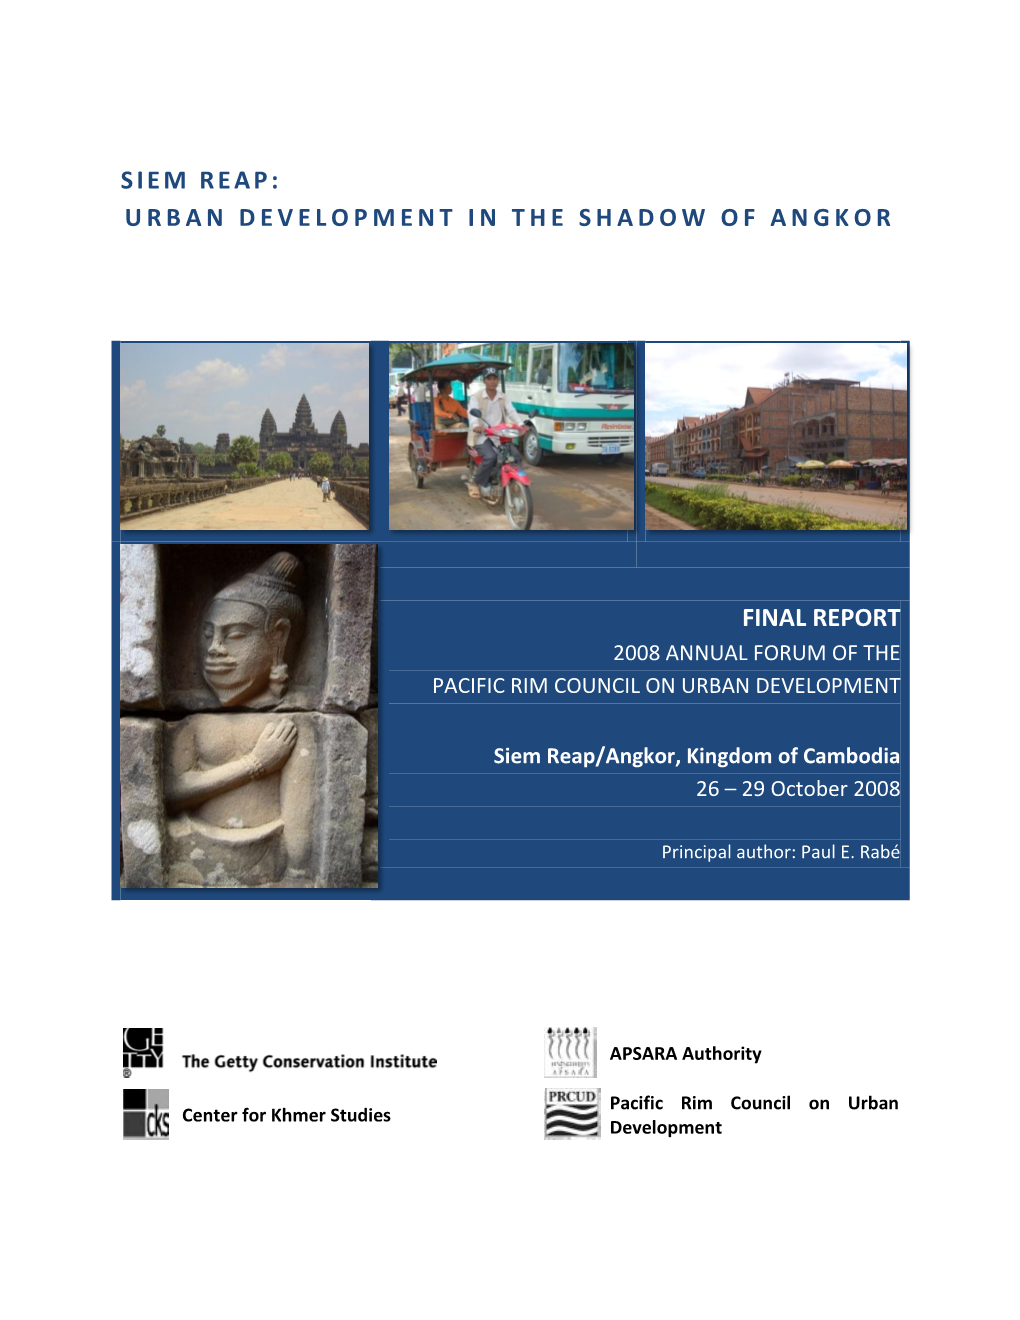 Siem Reap: Urban Development in the Shadow of Angkor